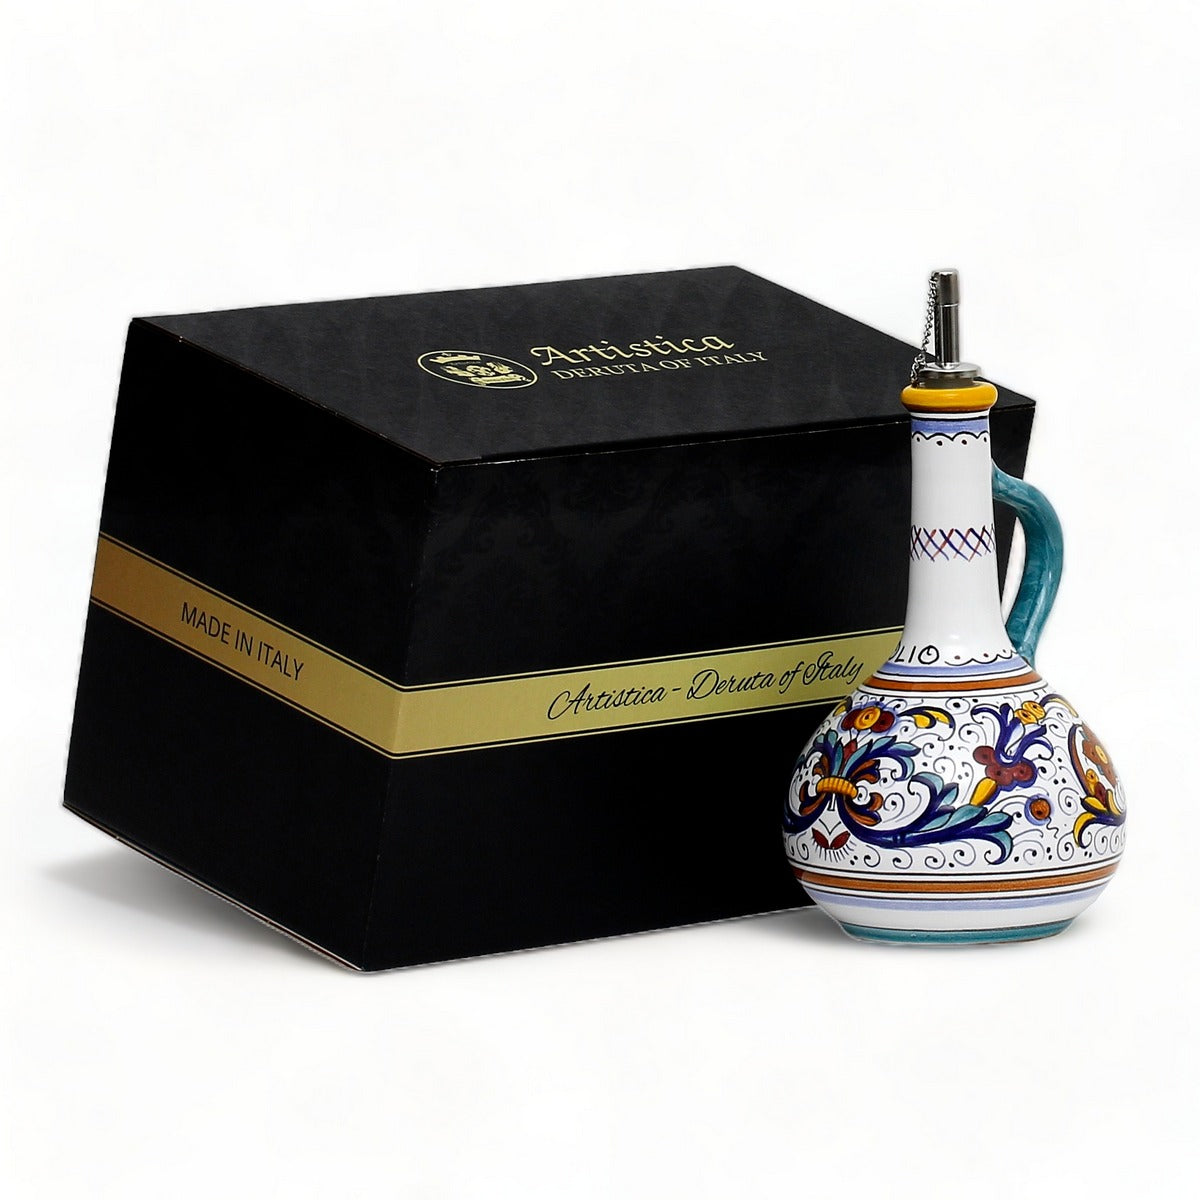 GIFT BOX: With authentic Deruta hand painted ceramic - Olive Oil Dispenser Ricco Deruta Design